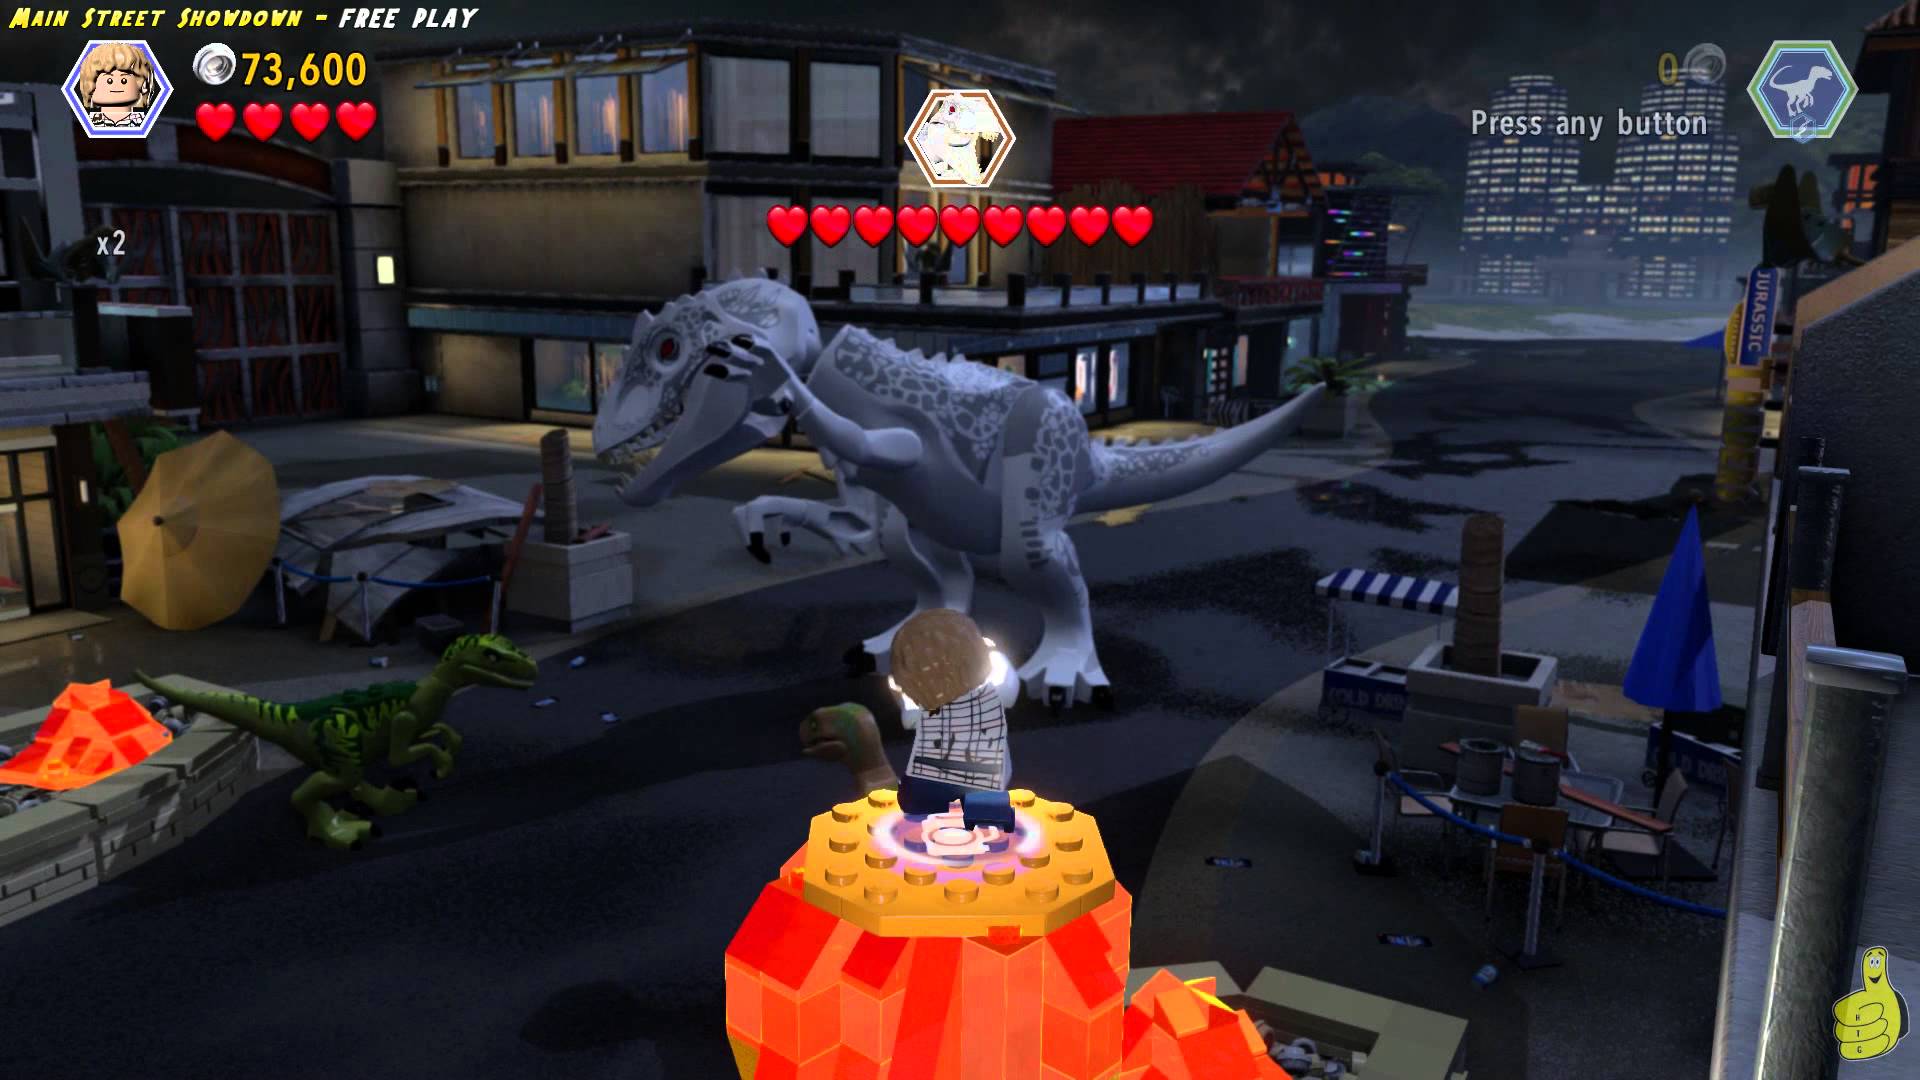 Lego Jurassic World: Level 20 Main Street Showdown FREE PLAY (All Collectibles) – HTG